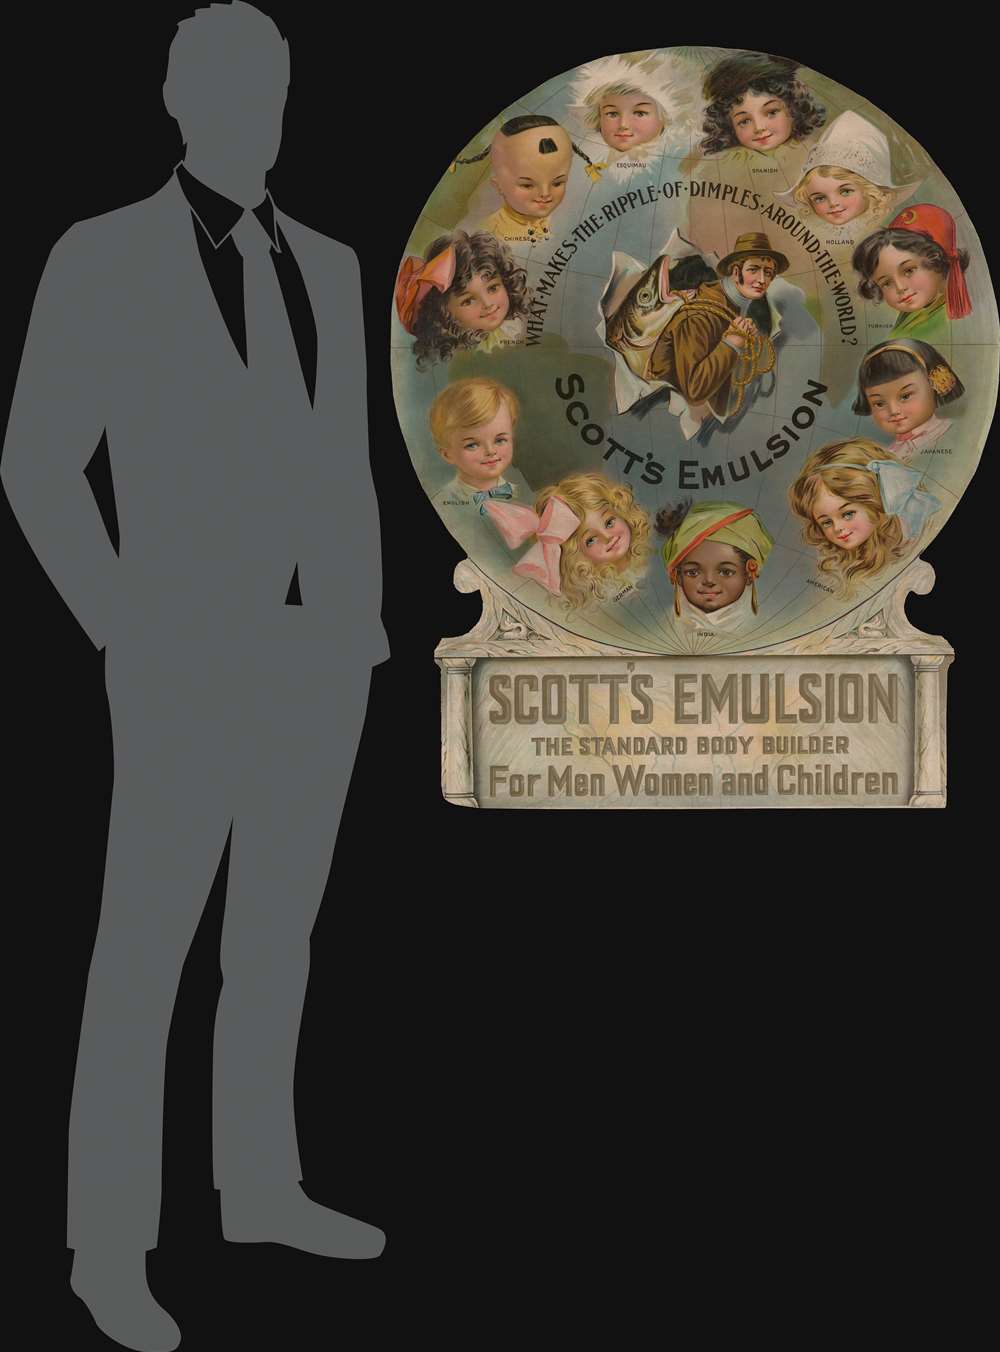 What Makes the Ripple of Dimples Around the World? Scotts Emulsion. / Scott's Emulsion The Standard Body Builder for Men Women and Children. - Alternate View 1